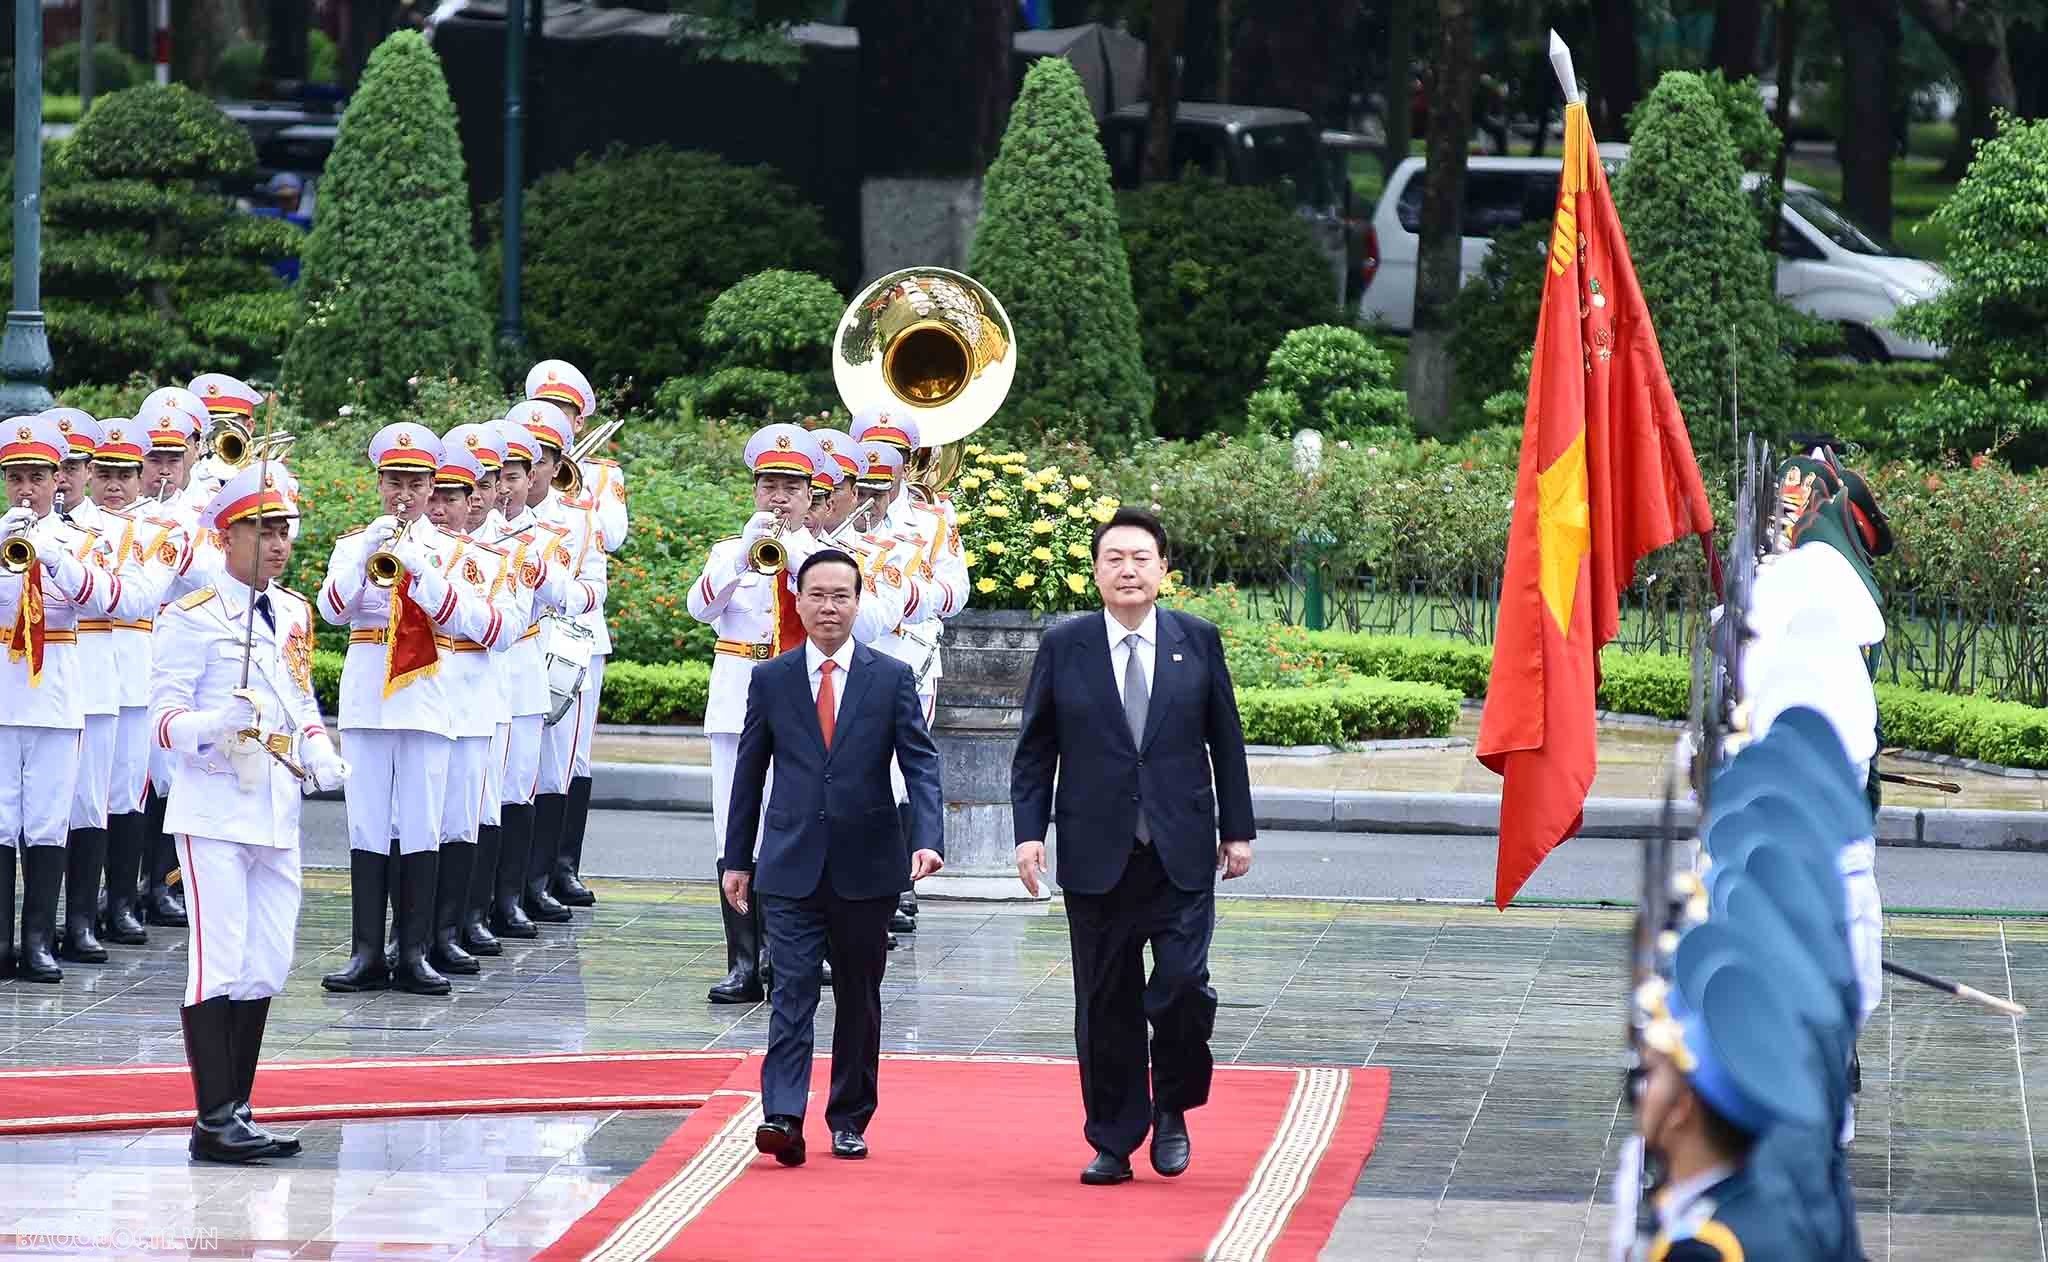 Expert optimistic about future of RoK - Vietnam relations